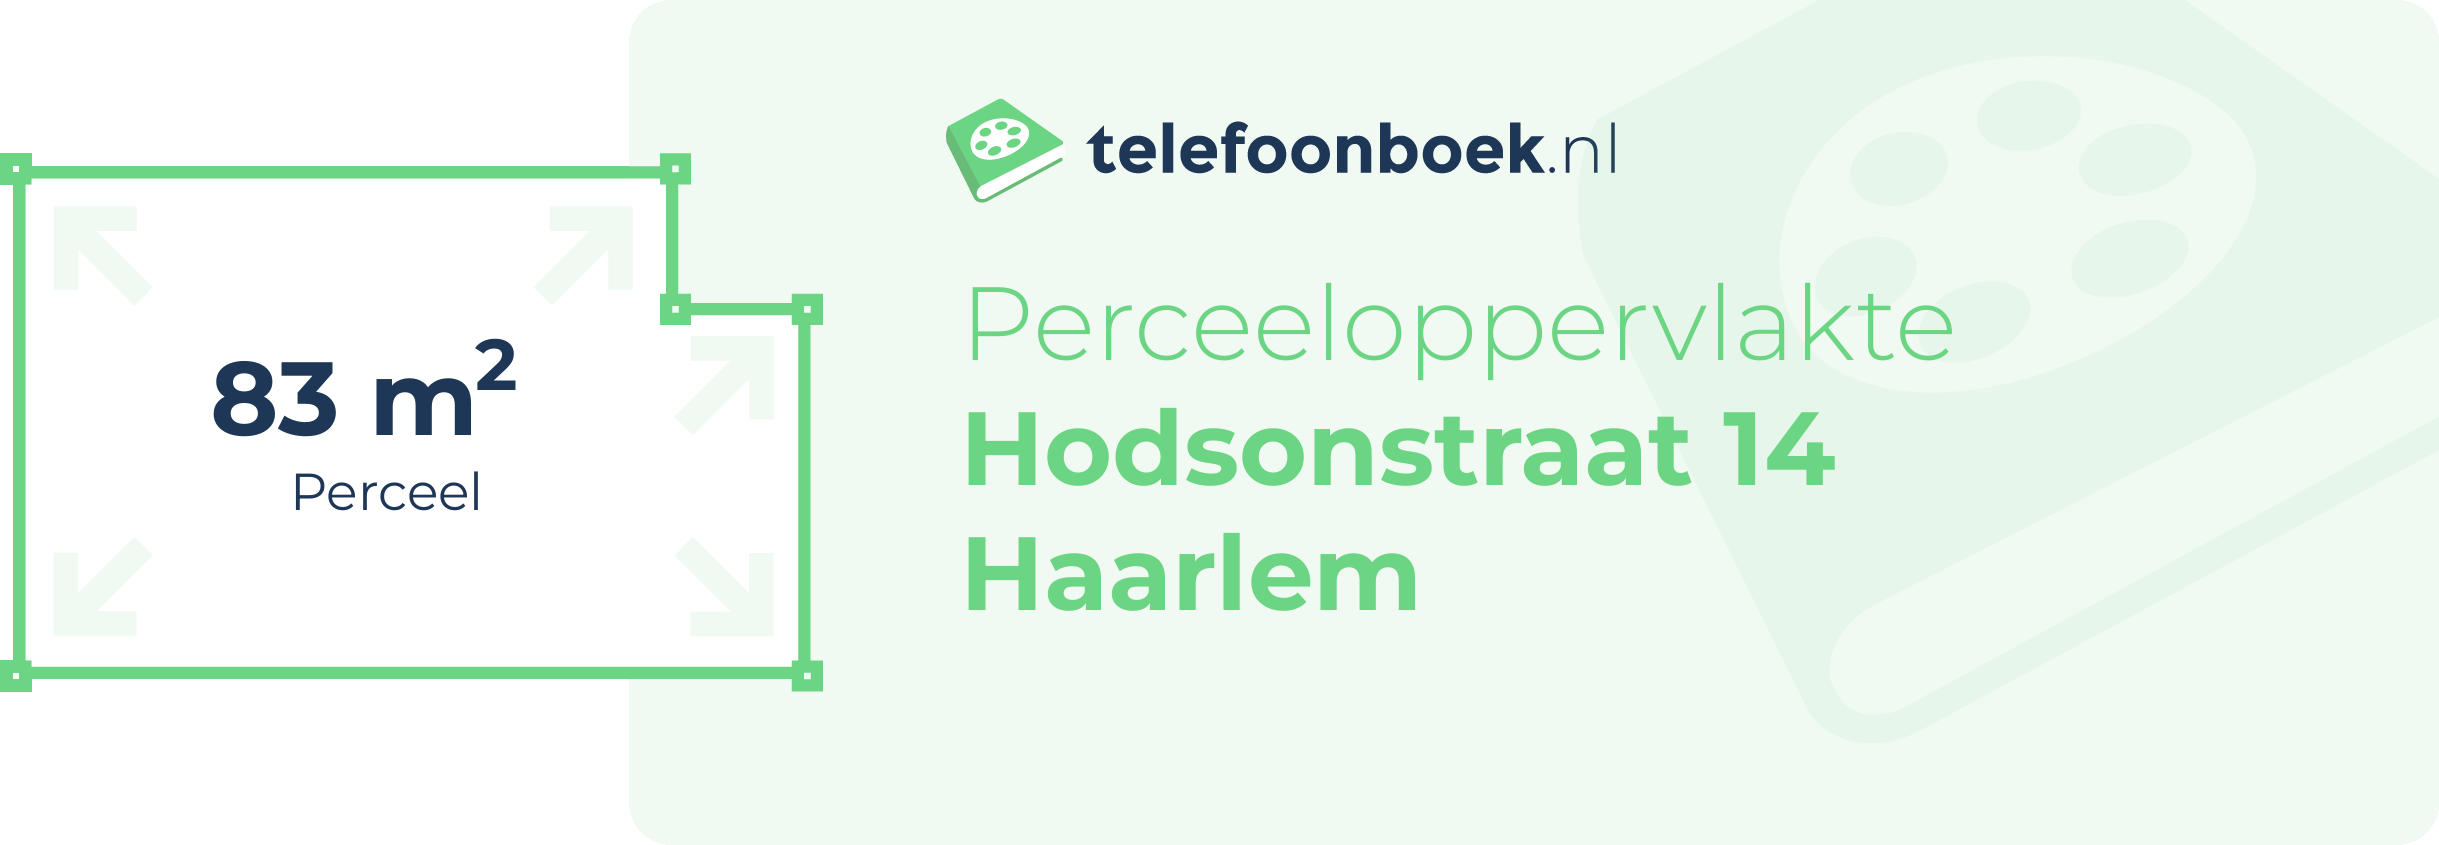 Perceeloppervlakte Hodsonstraat 14 Haarlem